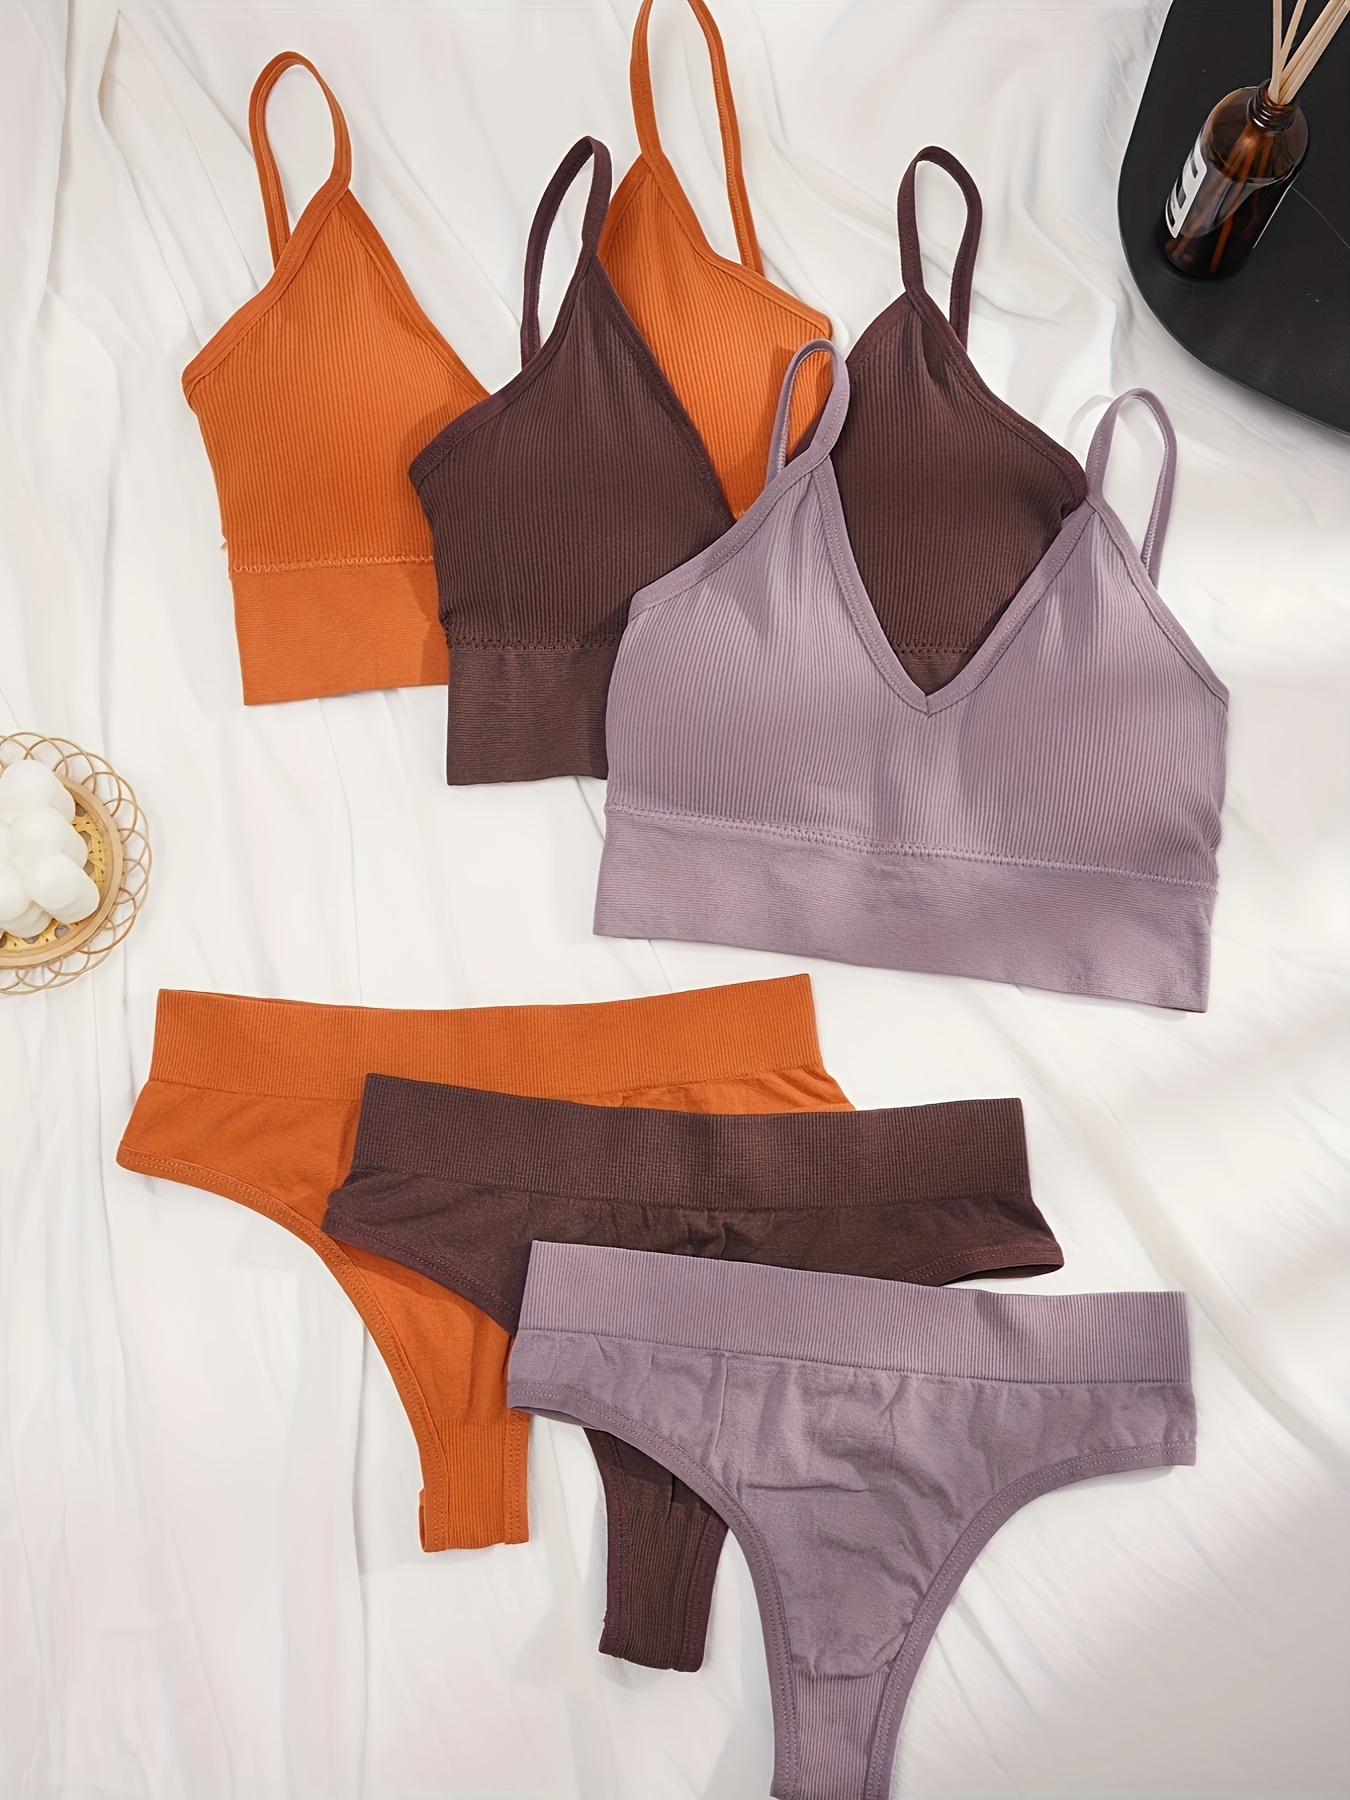 Solid Bra & Panties, Sexy Push Up Bra & Thong Panties Lingerie Set, Women's  Lingerie & Underwear